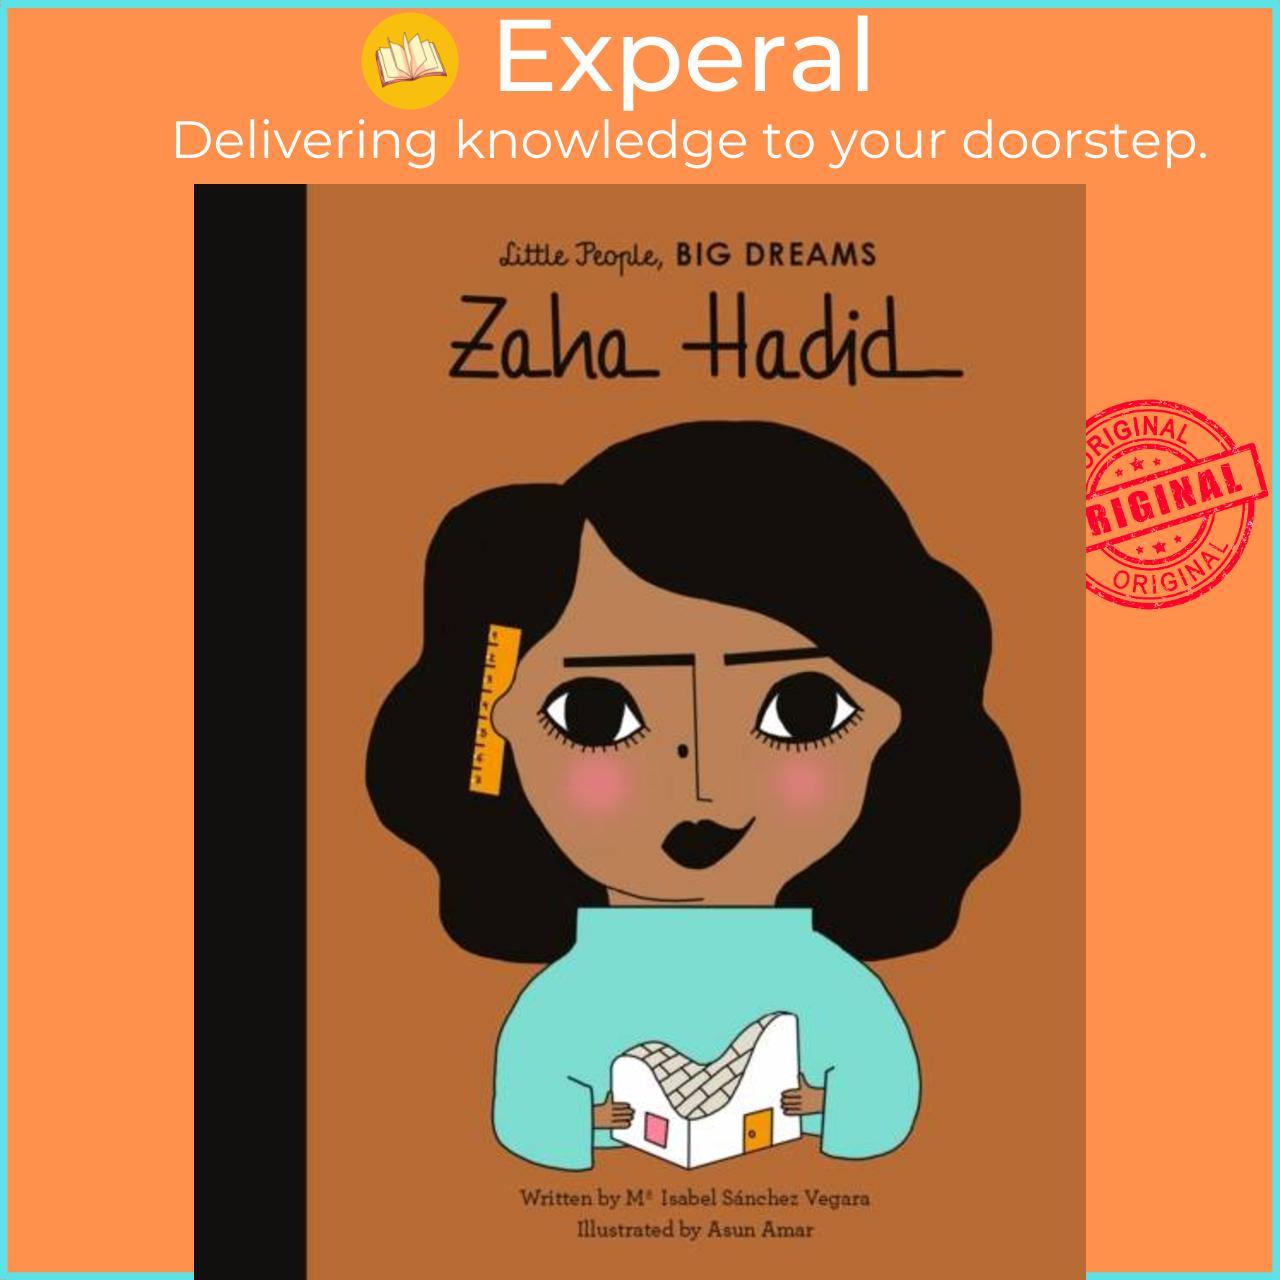 Sách - Zaha Hadid by Asun Amar (UK edition, hardcover)